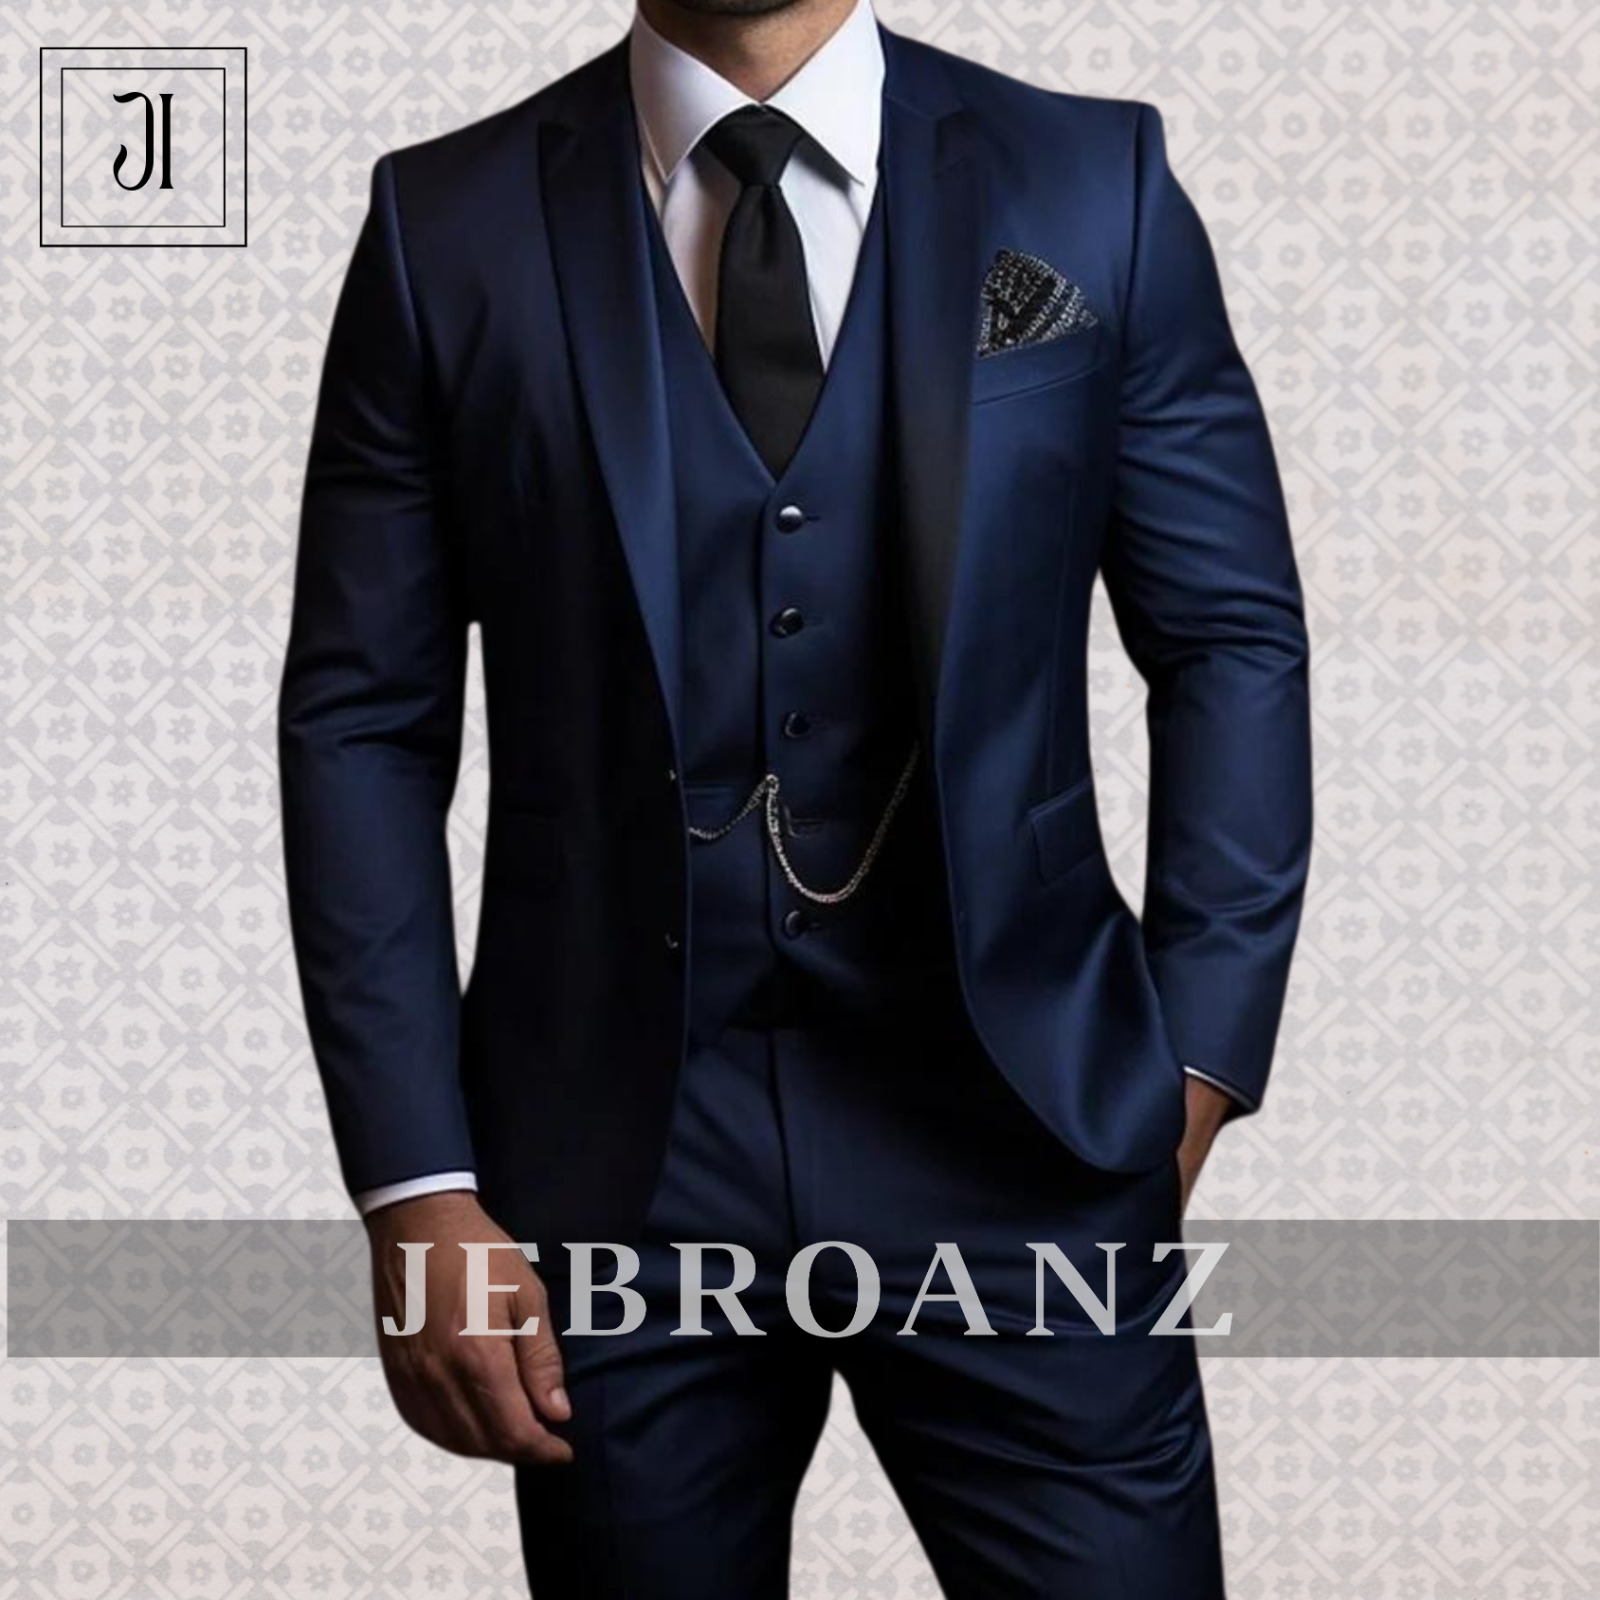 New Stunning Blue Suit For men , Men Suit 3 piece, Classic Groom Wedding Suit